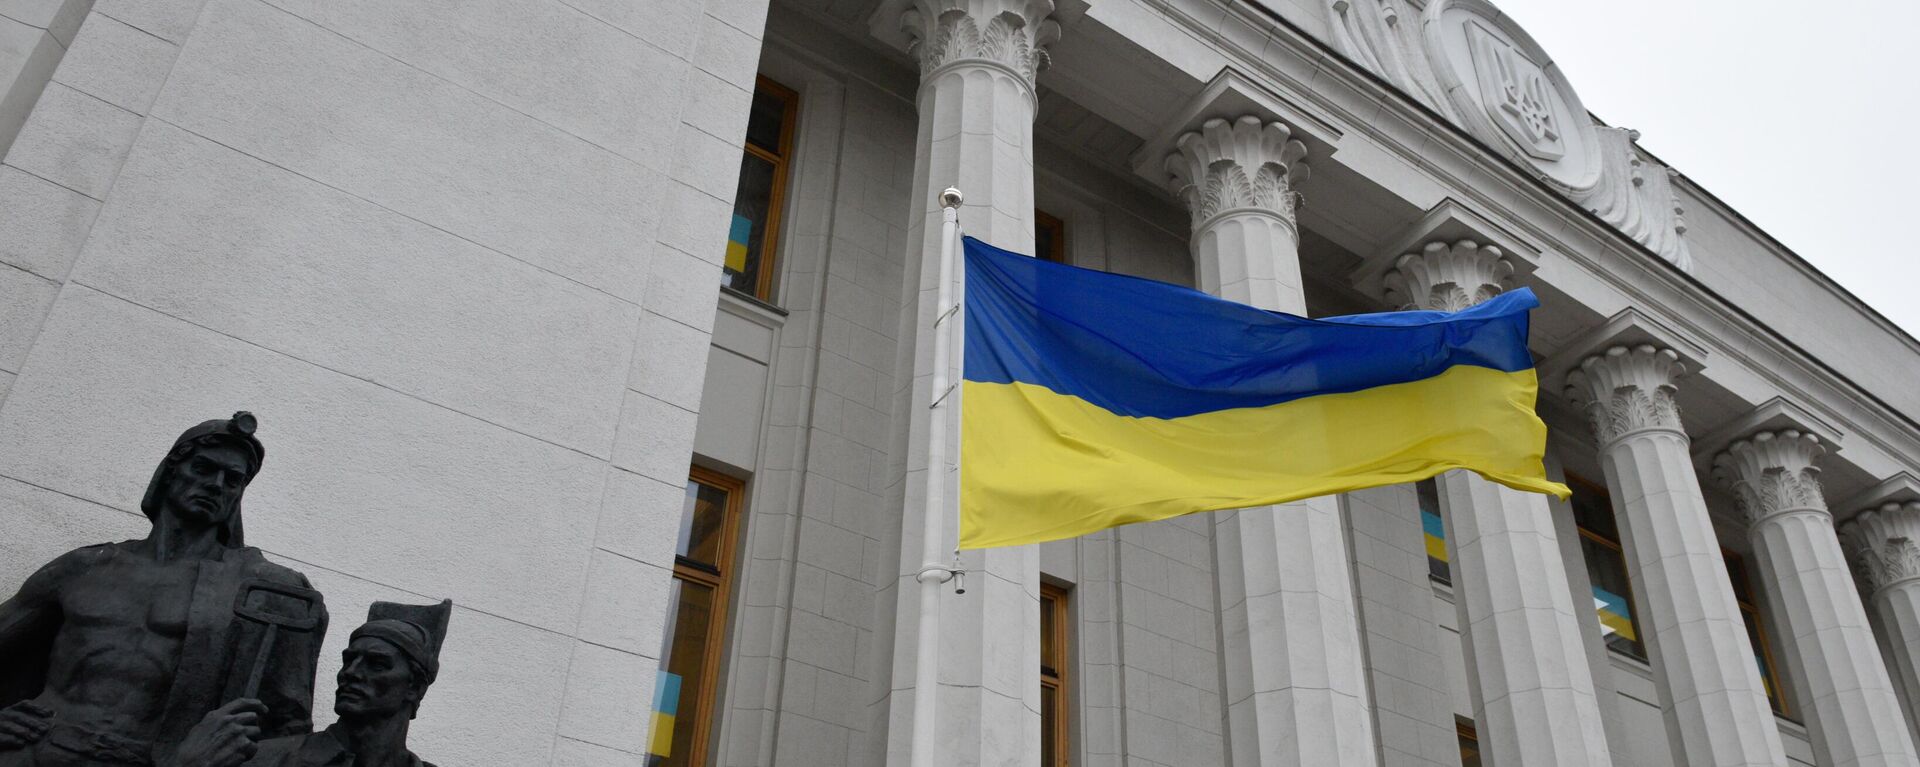 La bandera nacional de Ucrania ondea cerca del edificio de la Rada Suprema  - Sputnik Mundo, 1920, 07.09.2022